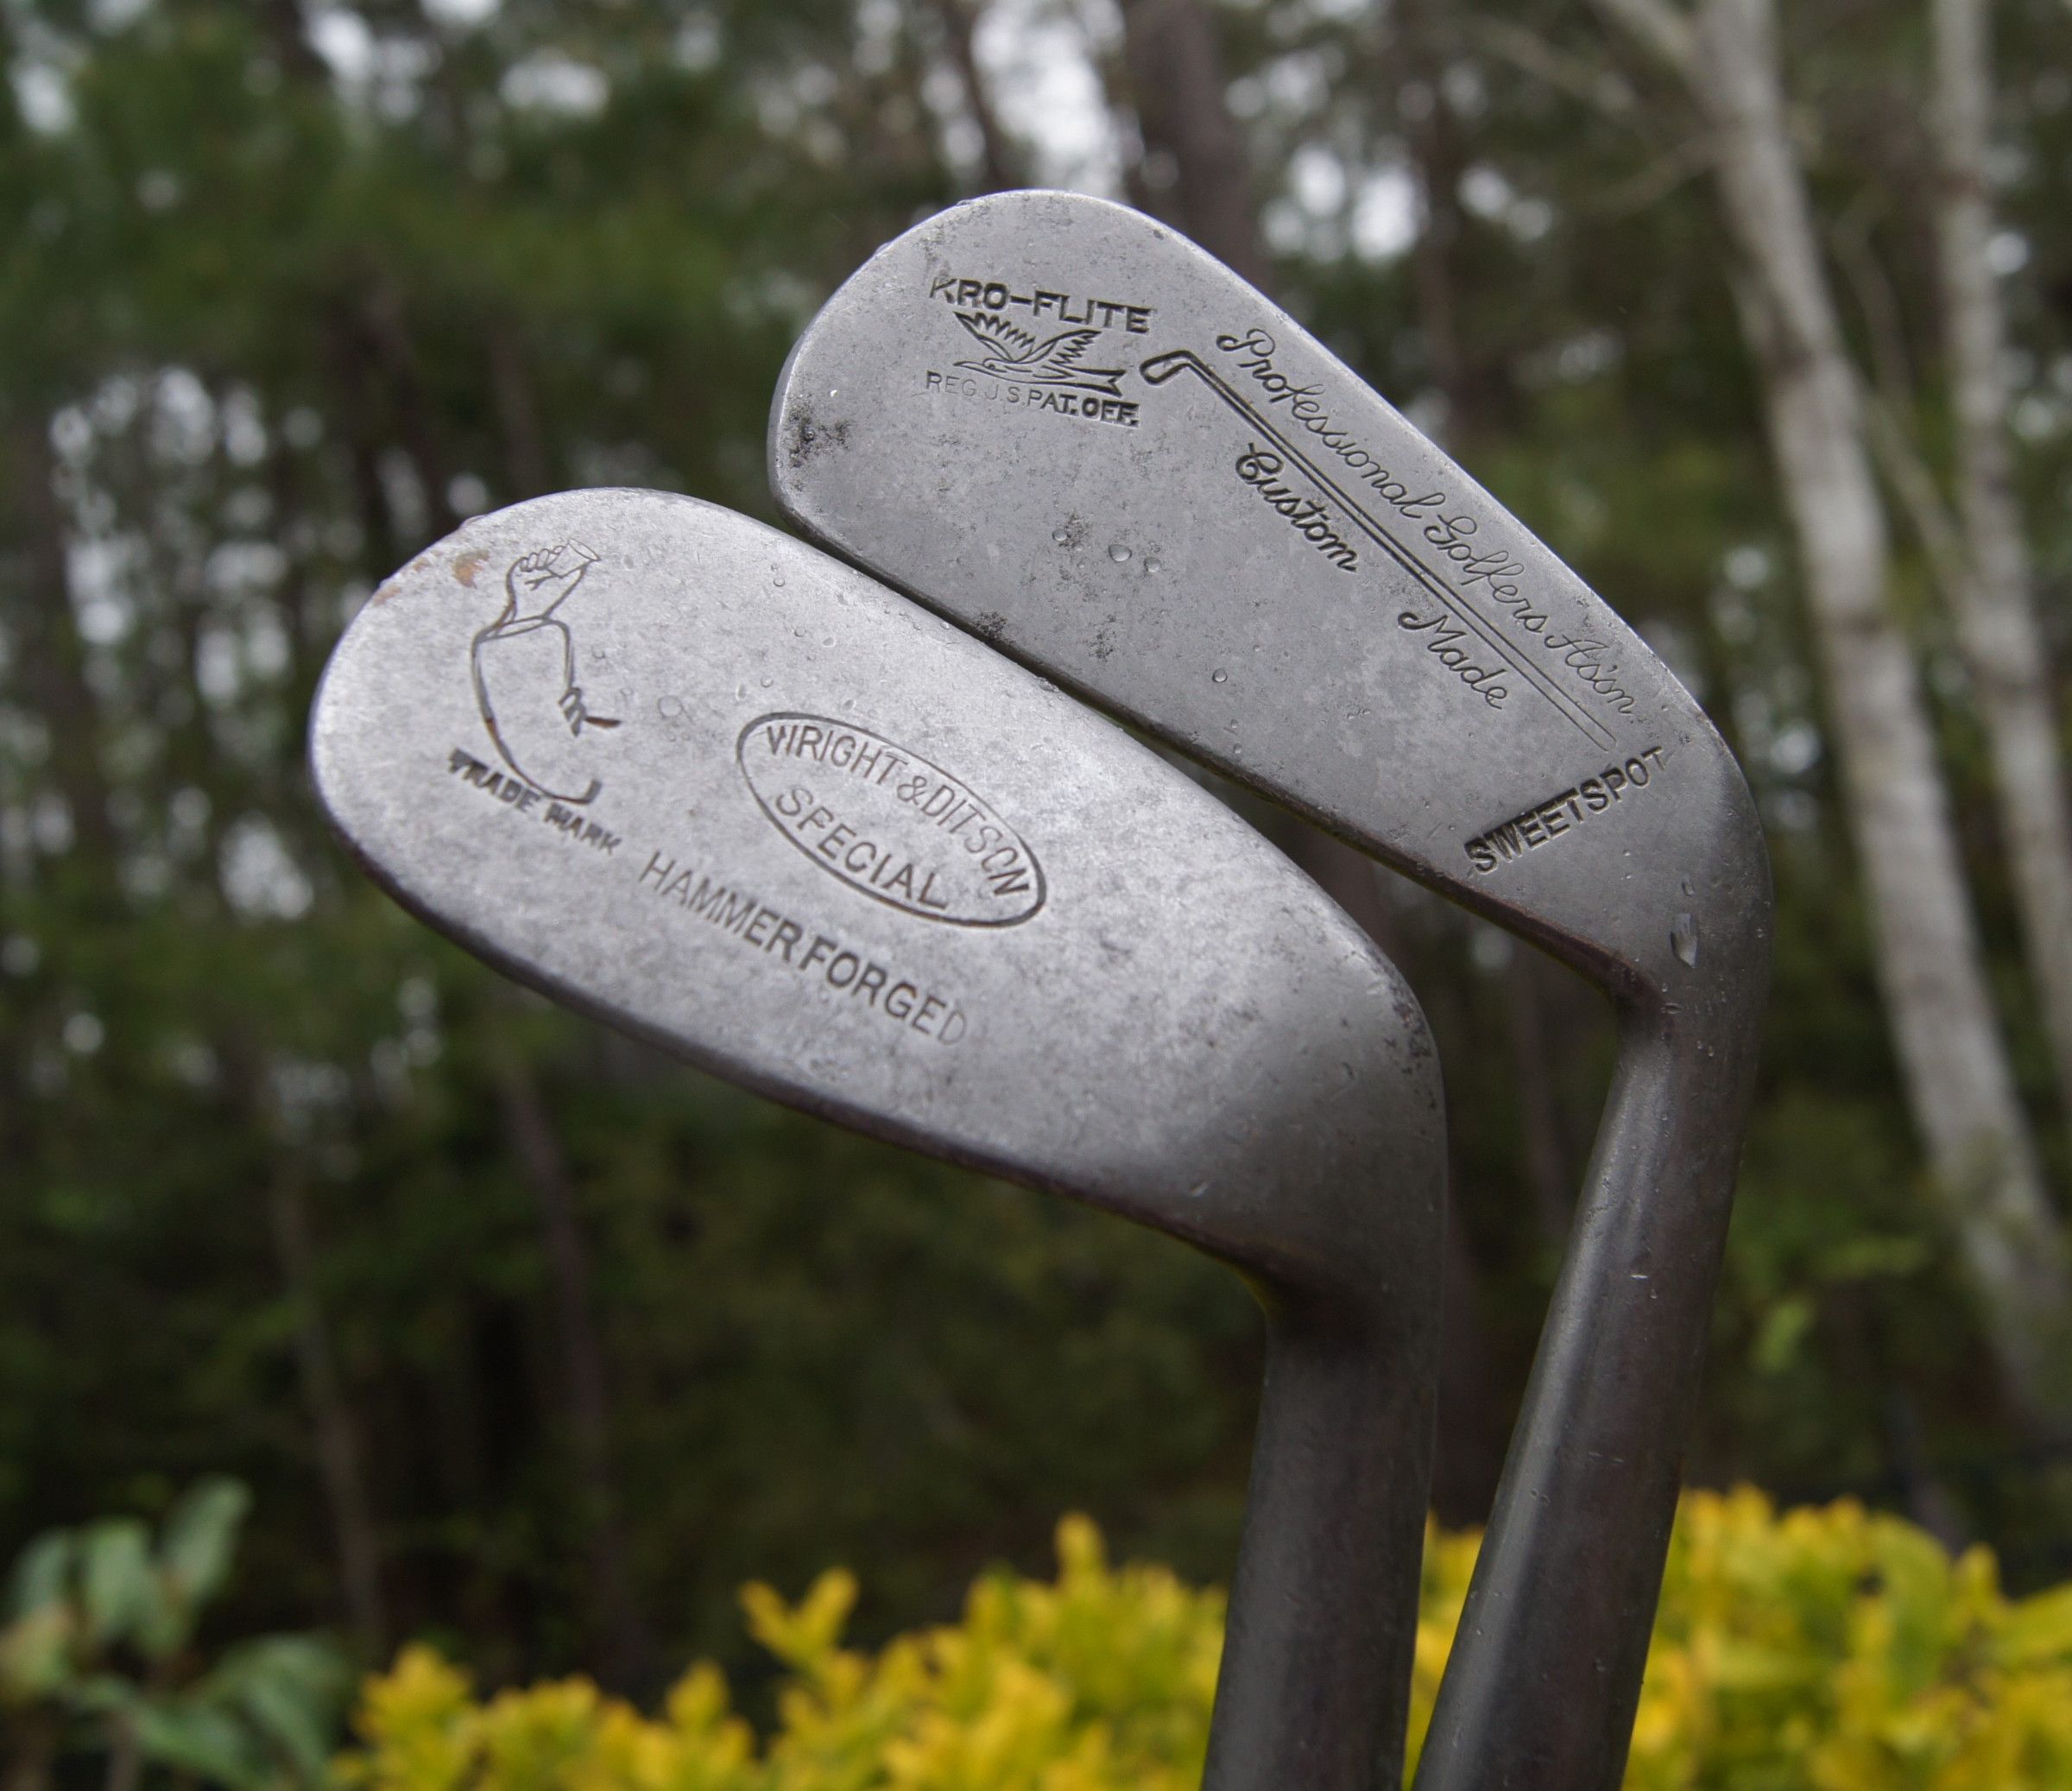 2 C1930 Golf Clubs Wright Ditson Niblick Mashie + Spalding 3 Iron